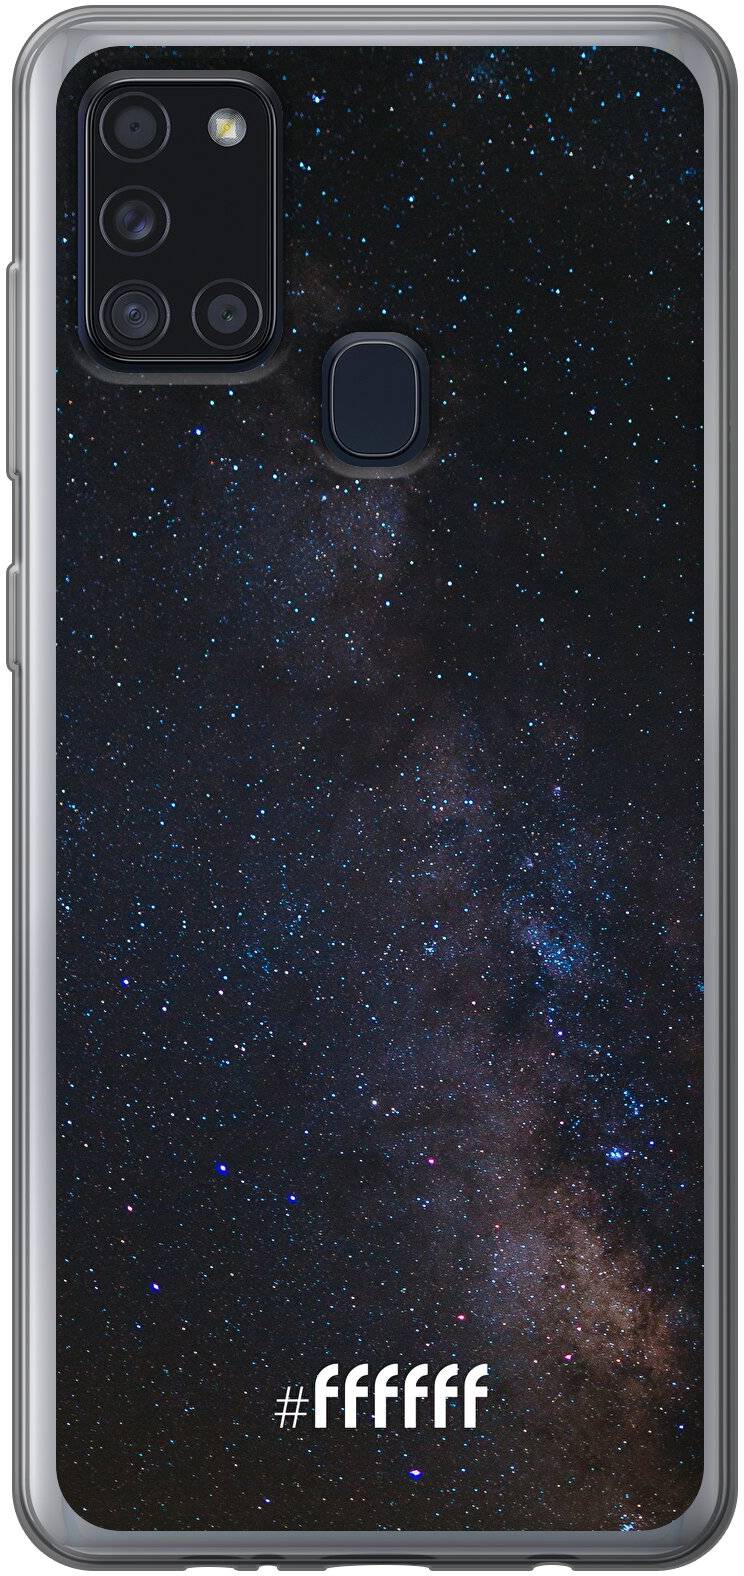 Dark Space Galaxy A21s